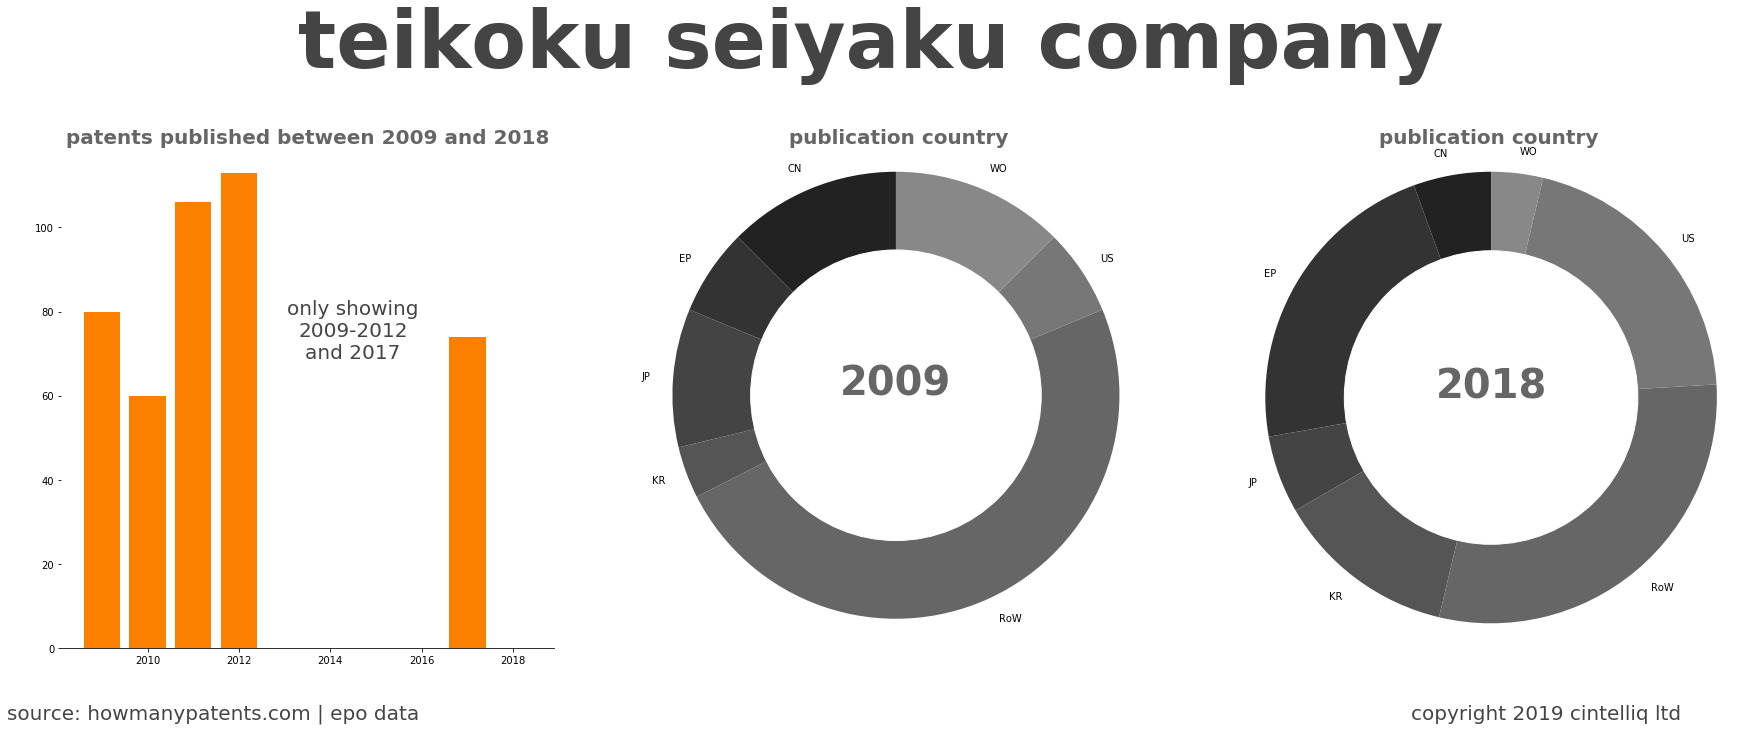 summary of patents for Teikoku Seiyaku Company